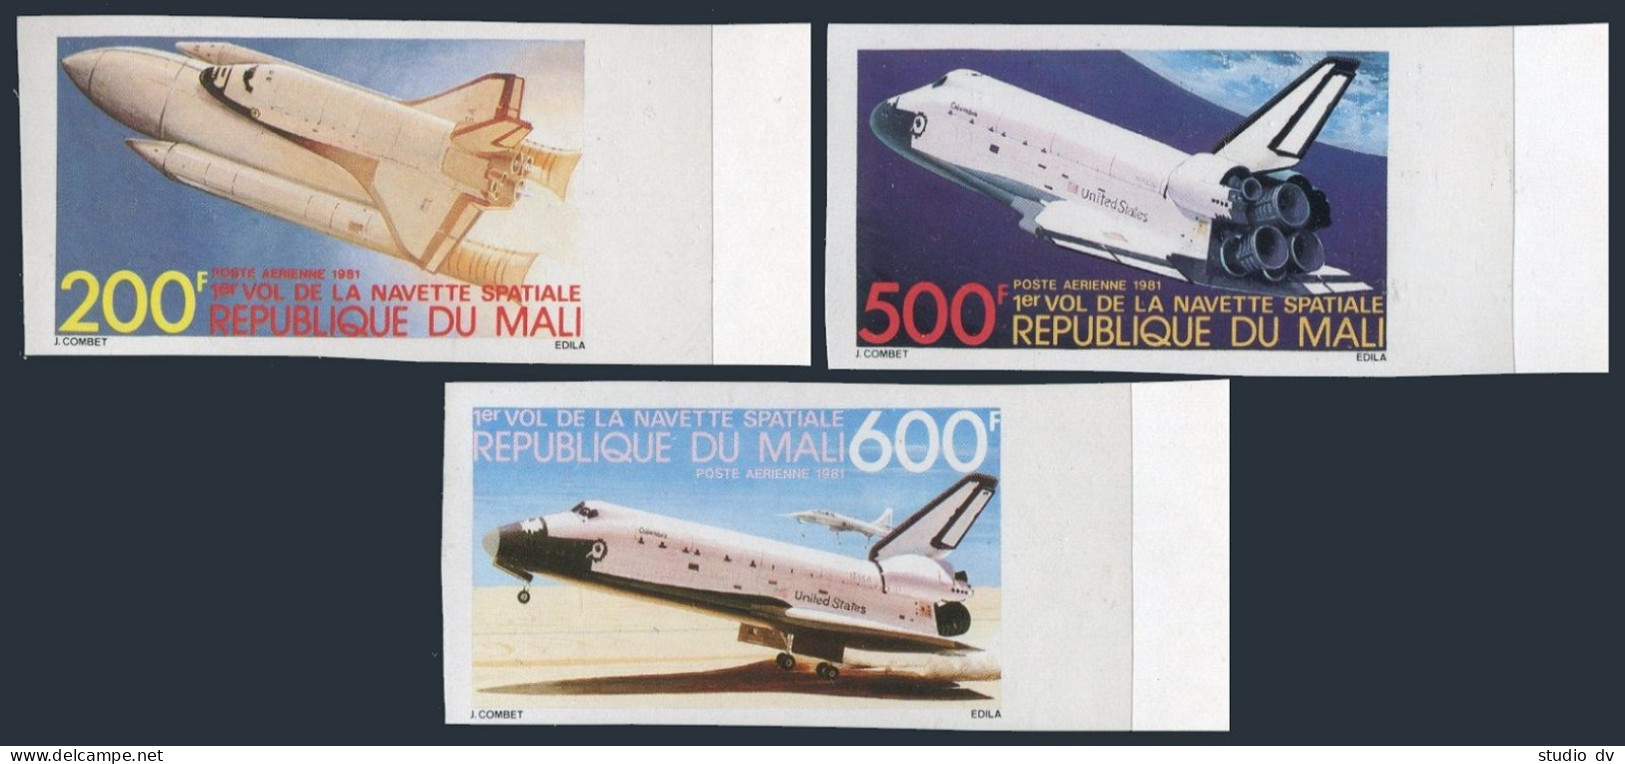 Mali C430-C432 Imperf, MNH. Michel 872B-874B. Columbia Space Shuttle, 1981. - Mali (1959-...)